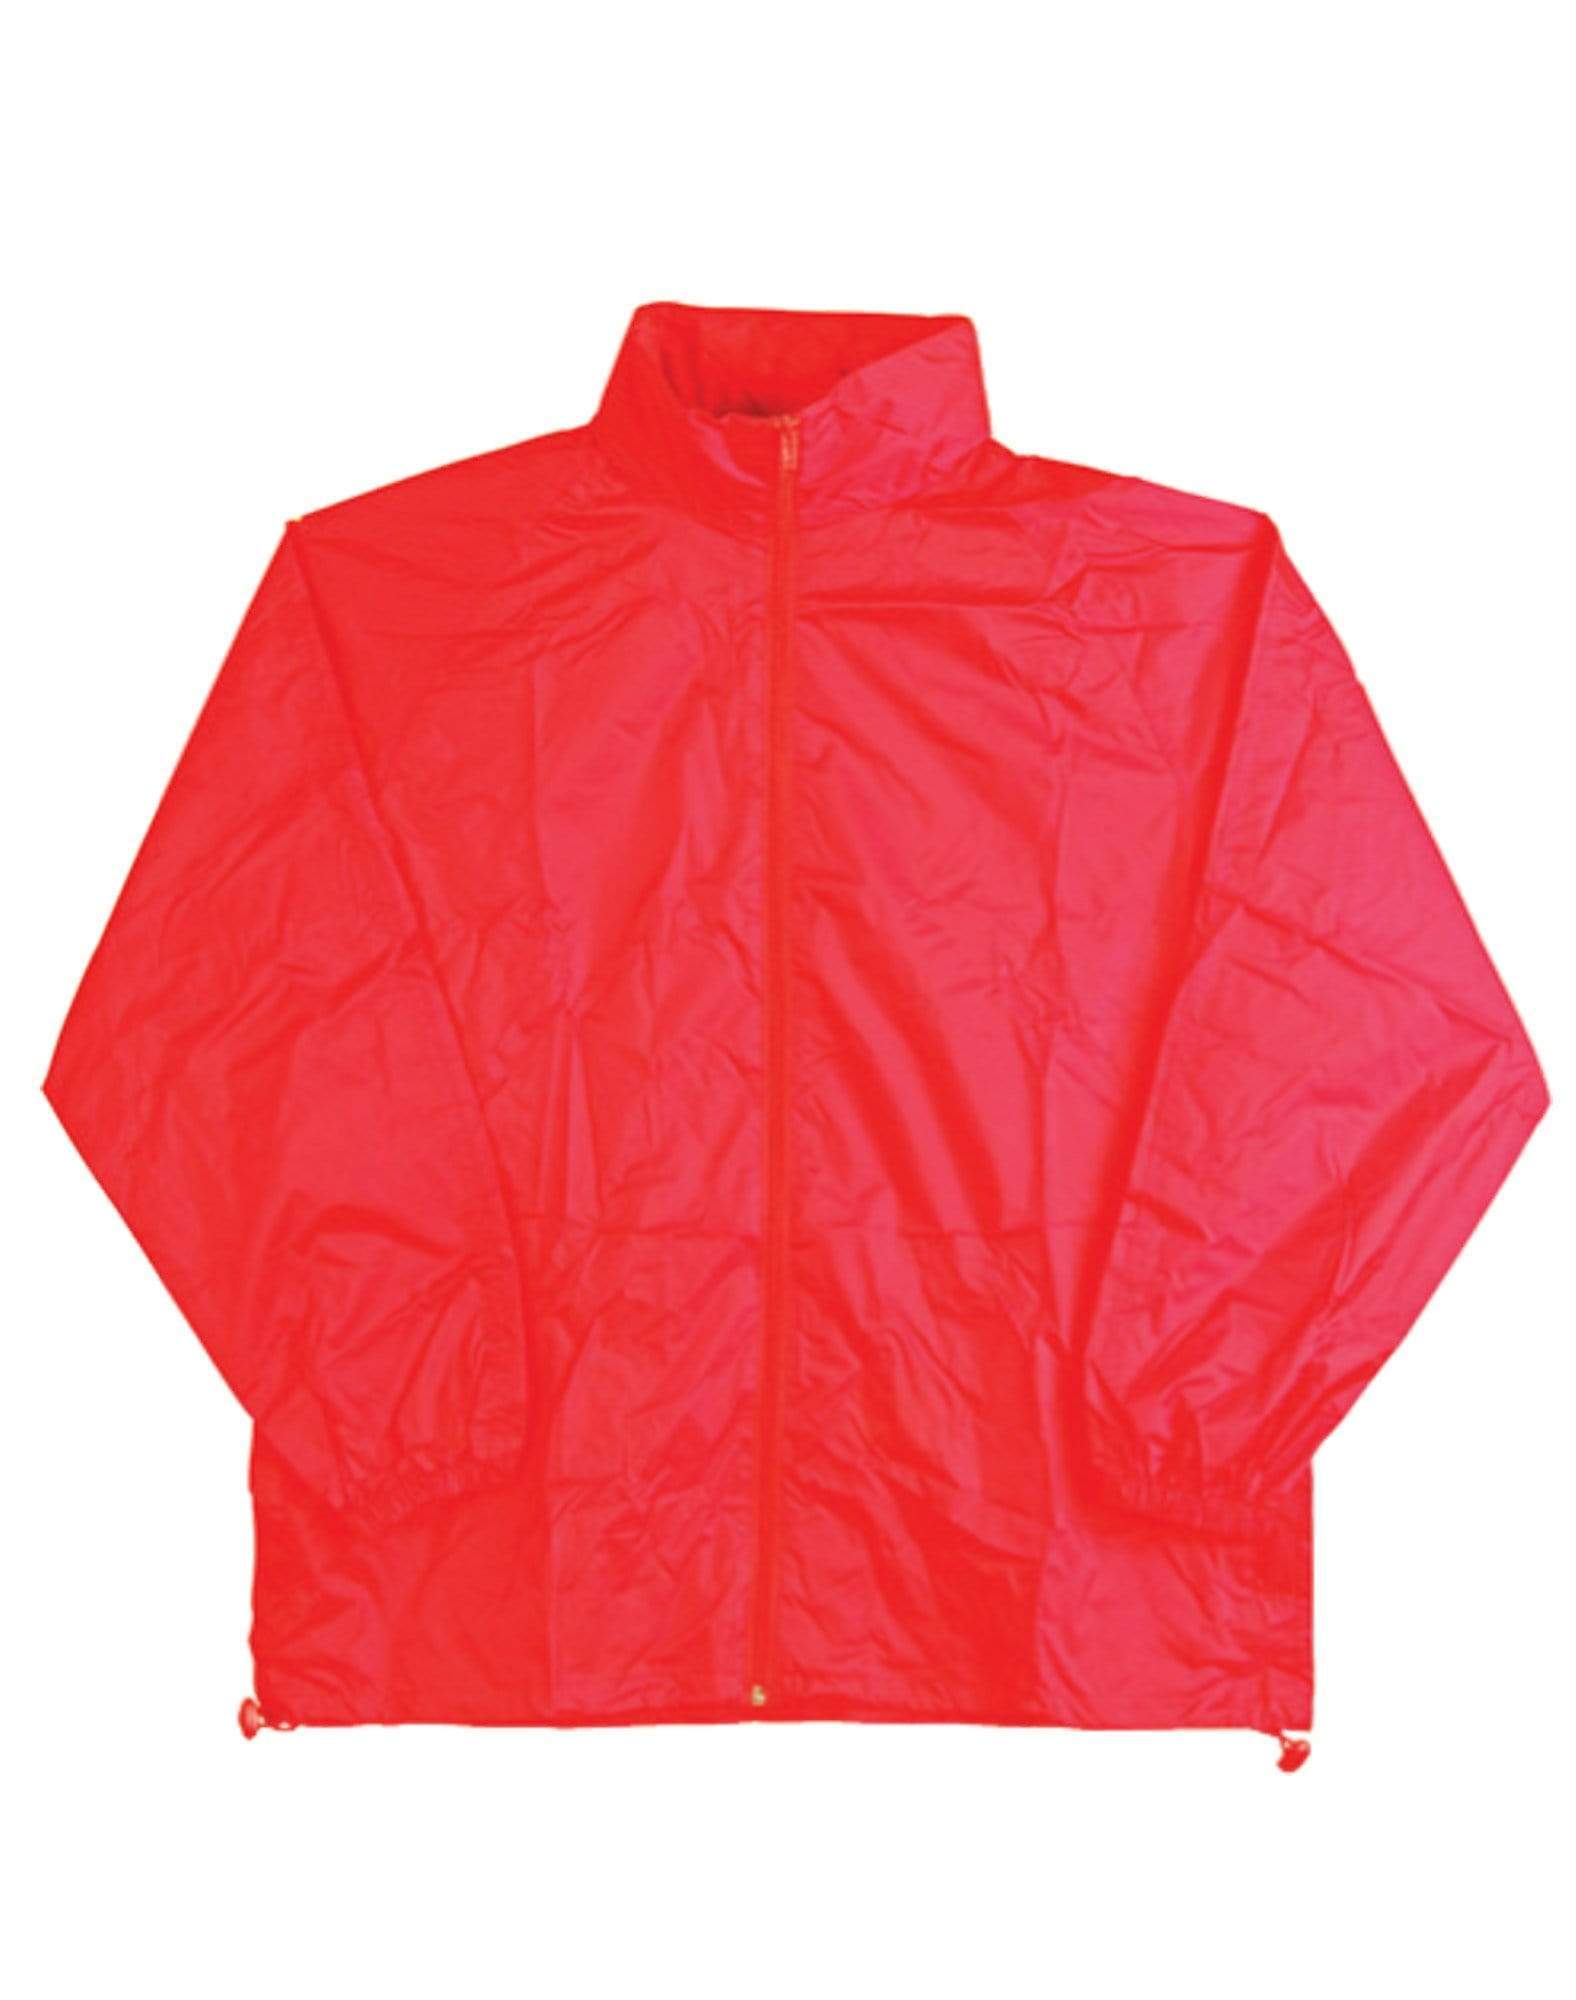 WINNING SPIRIT RAIN FOREST Spray Jacket - Unisex JK10 Casual Wear Winning Spirit Red XS 